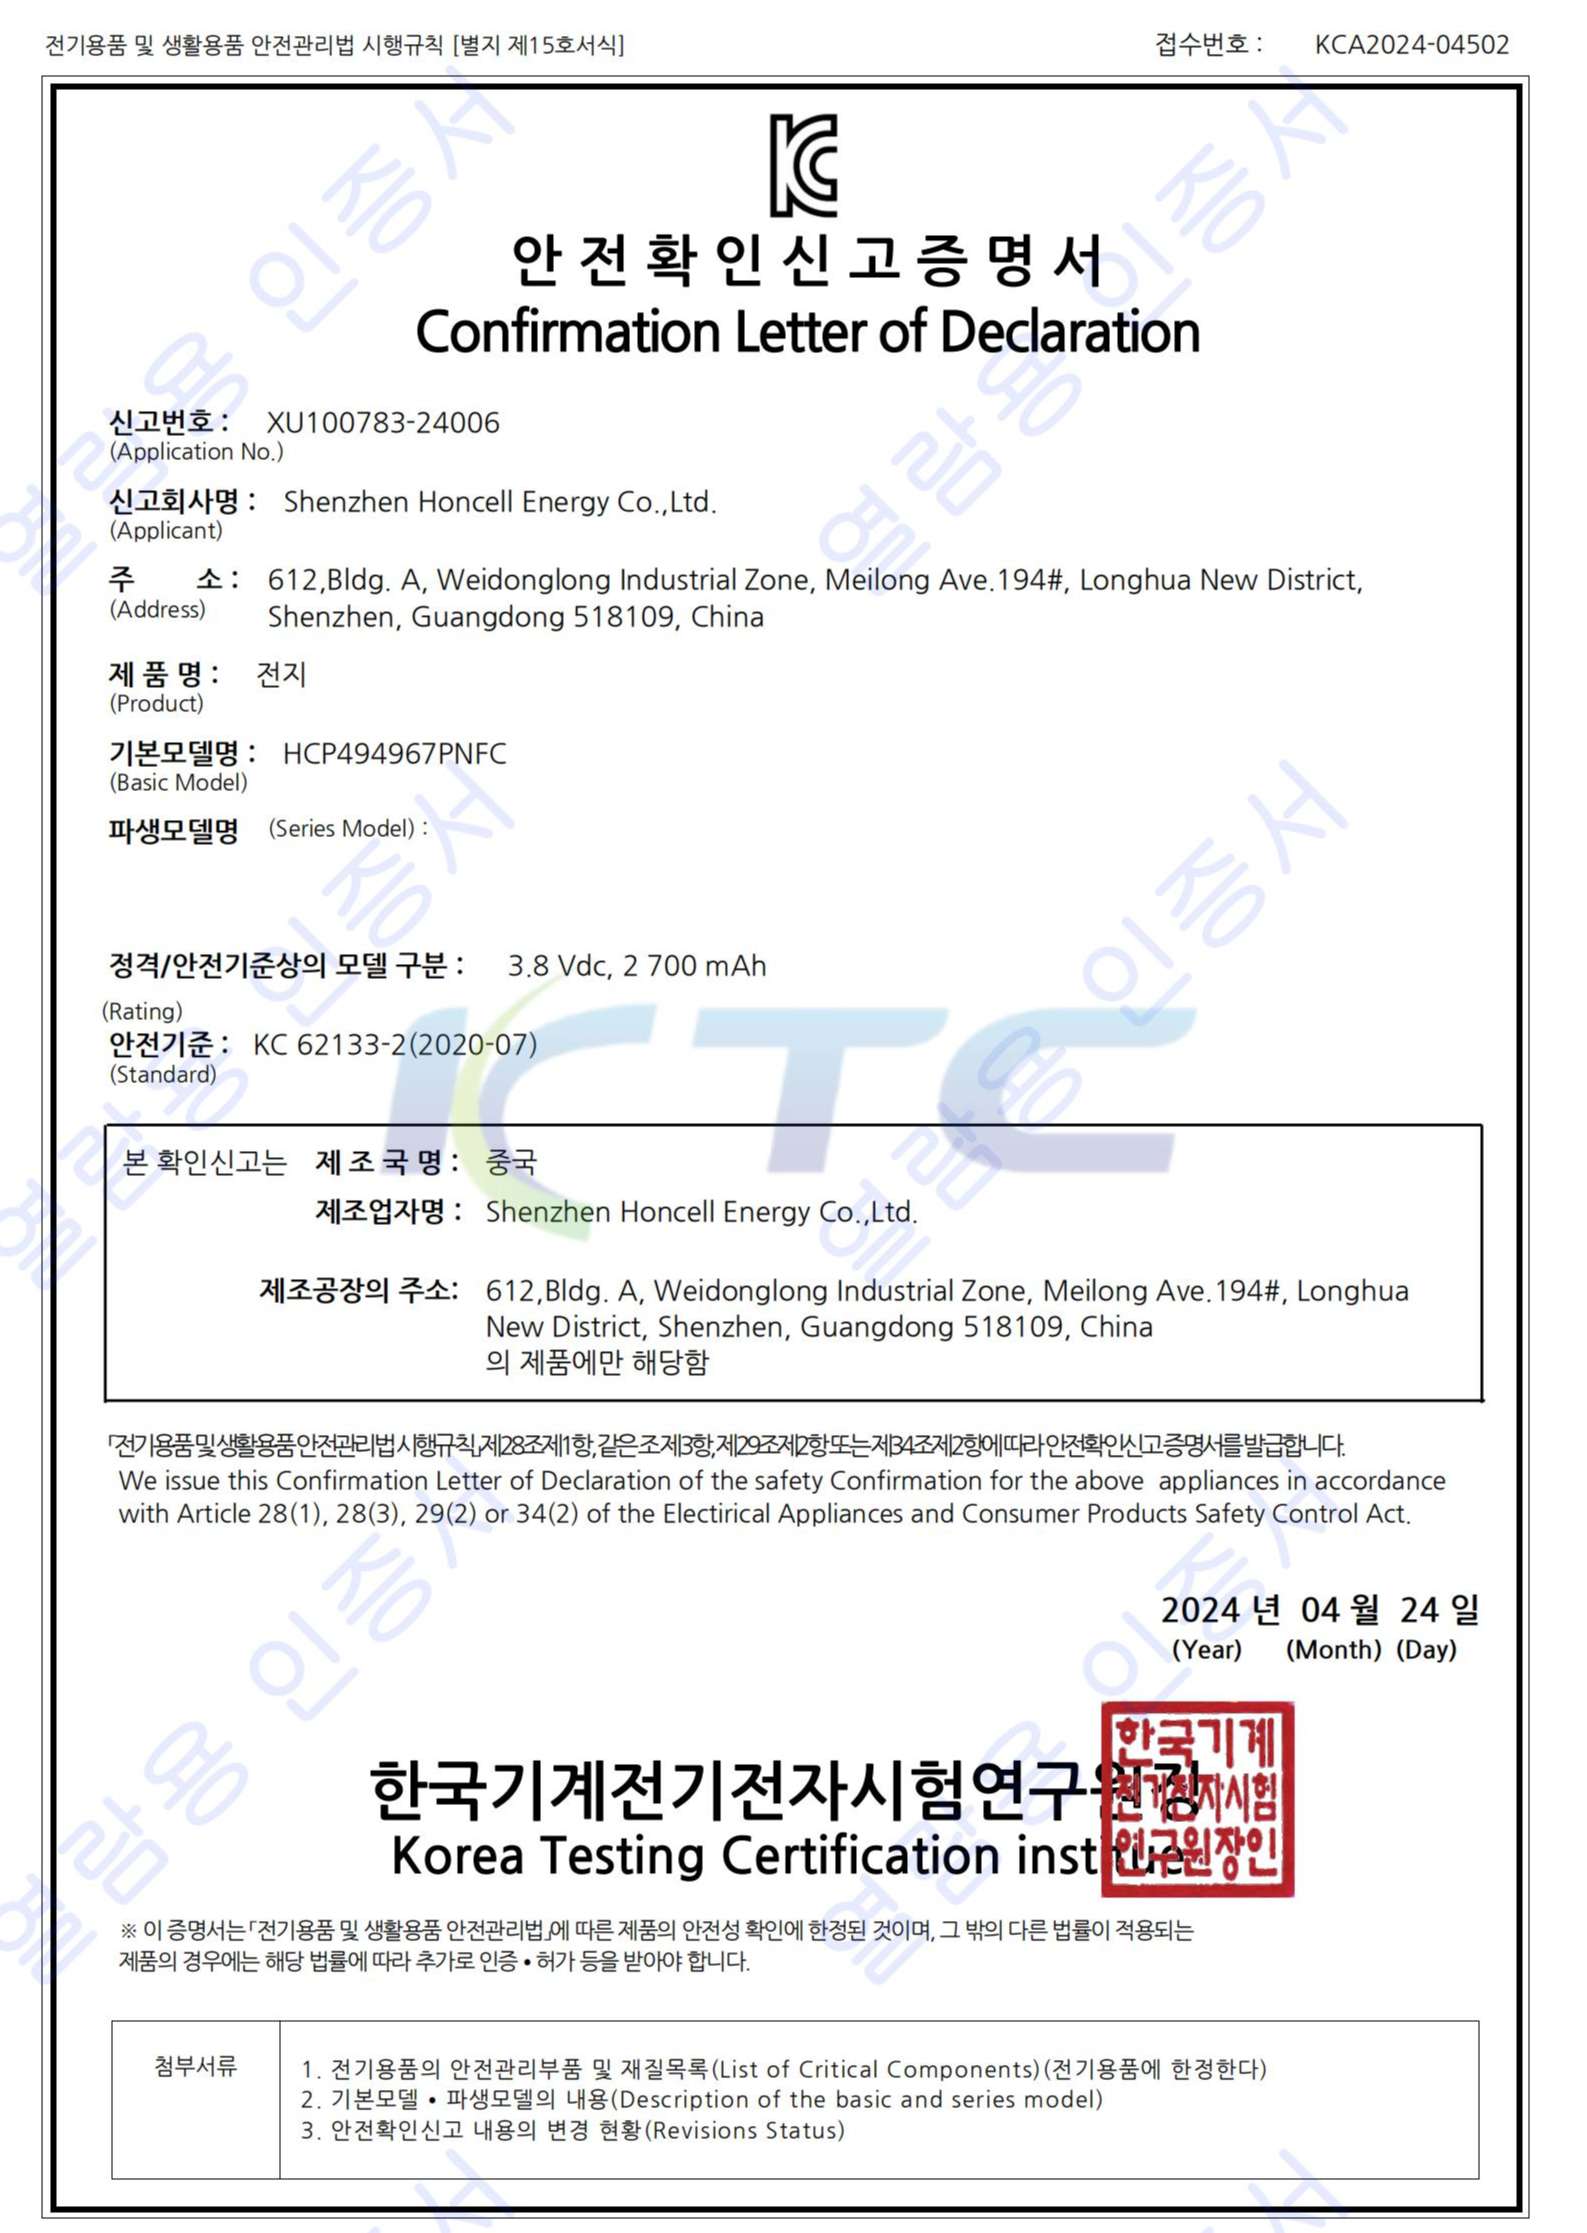 KC certificate.jpg